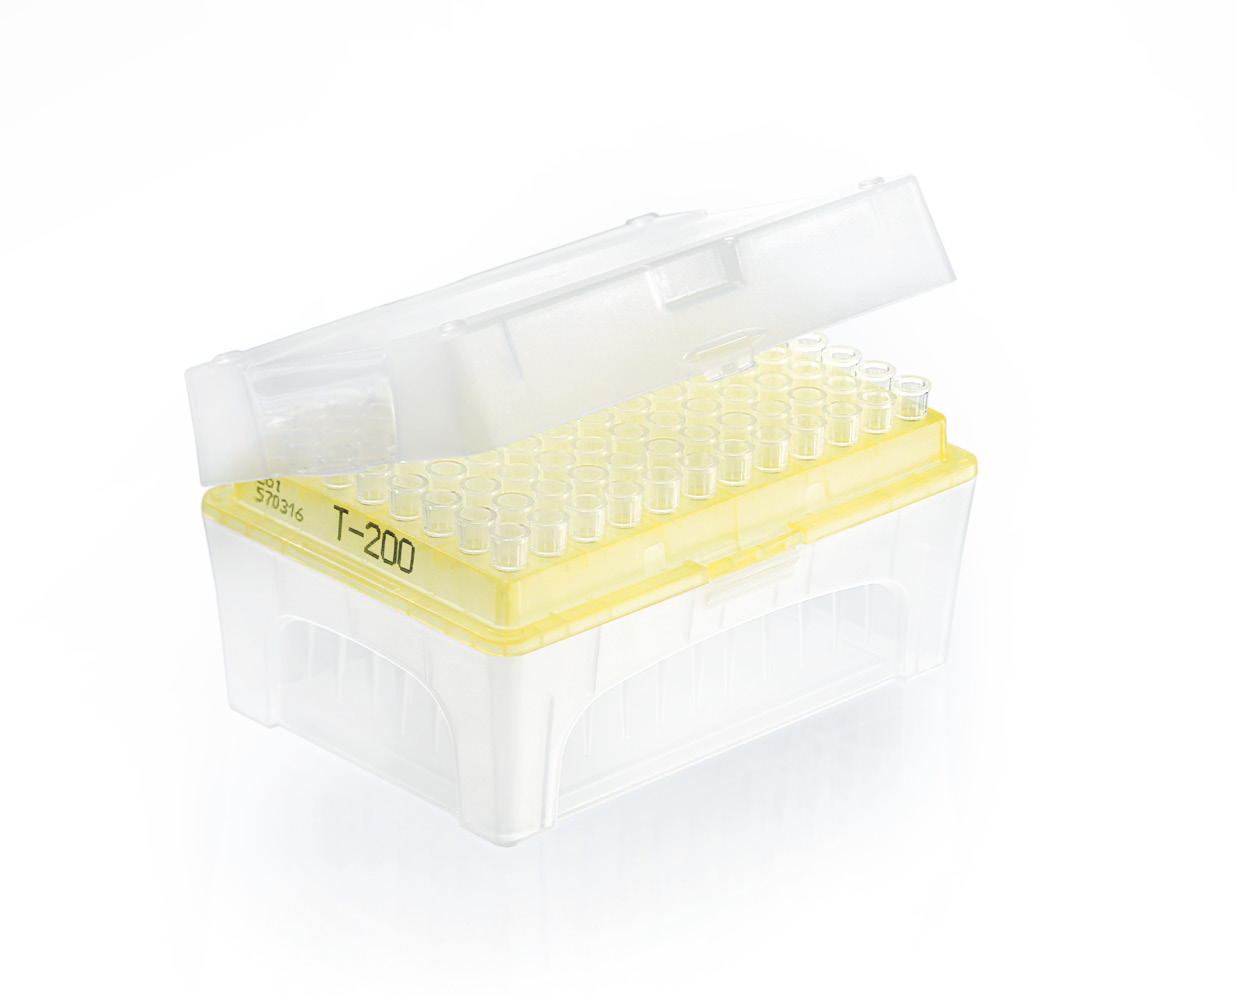 Filter tips rack DNA-/RNase-free IVD TipBox 5 - 200 μl, PCK=480